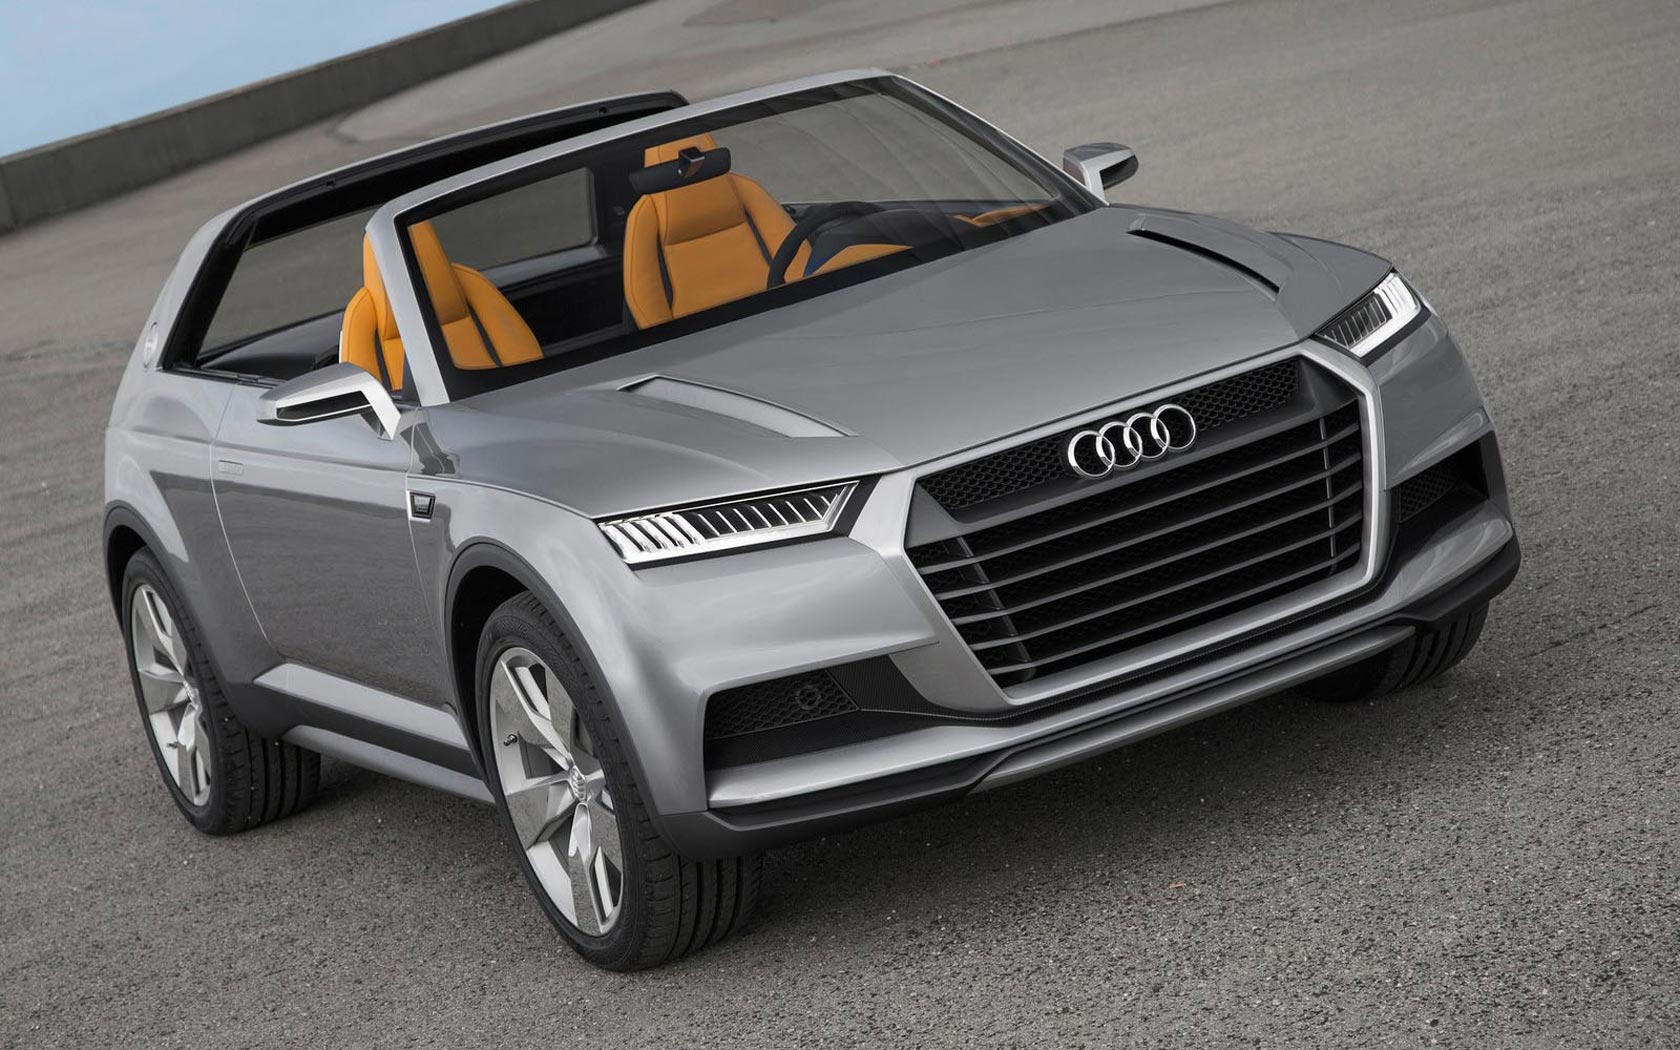  Audi Crosslane Coupe Concept 